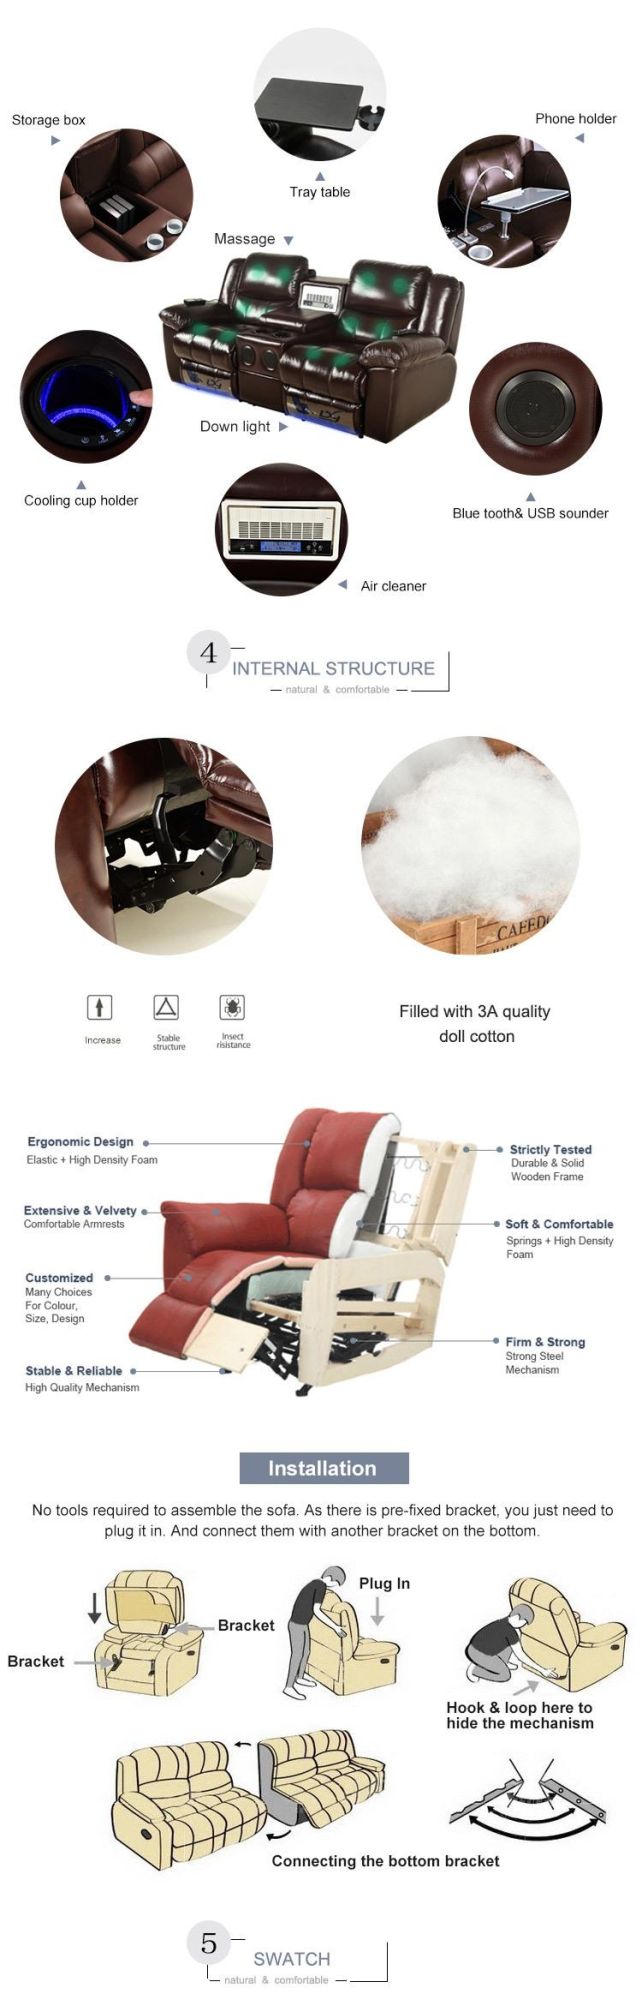 Best Selling Modern Style Power Reclienr Genuine Leather Sofa Set